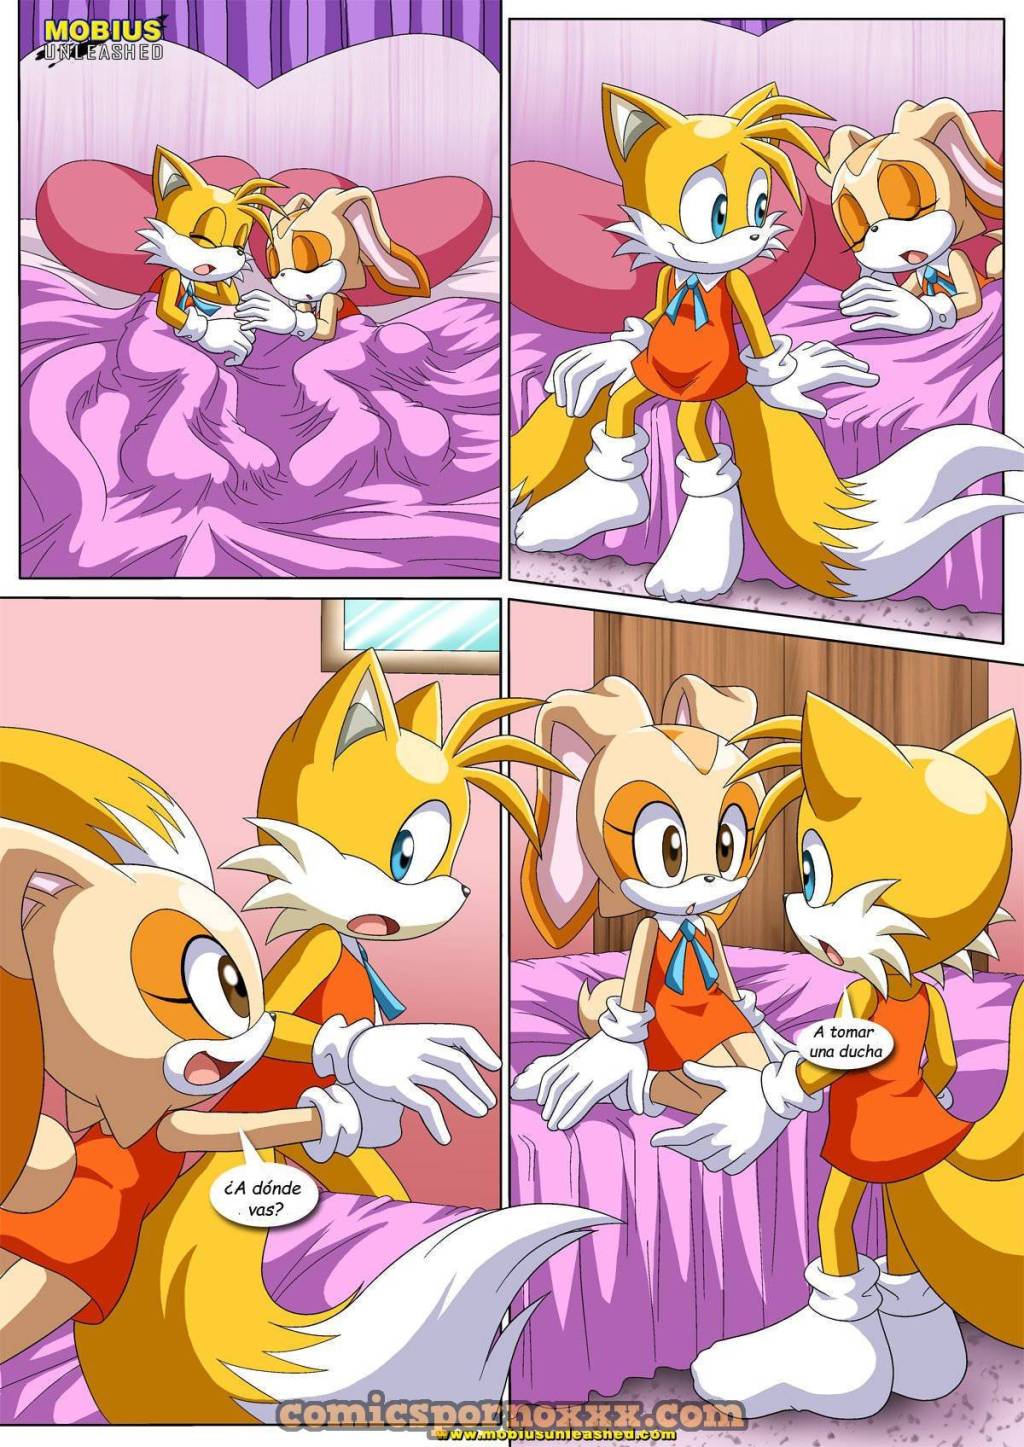 Tails & Cream (Colas y Crema Sonic) - 2 - Comics Porno - Hentai Manga - Cartoon XXX